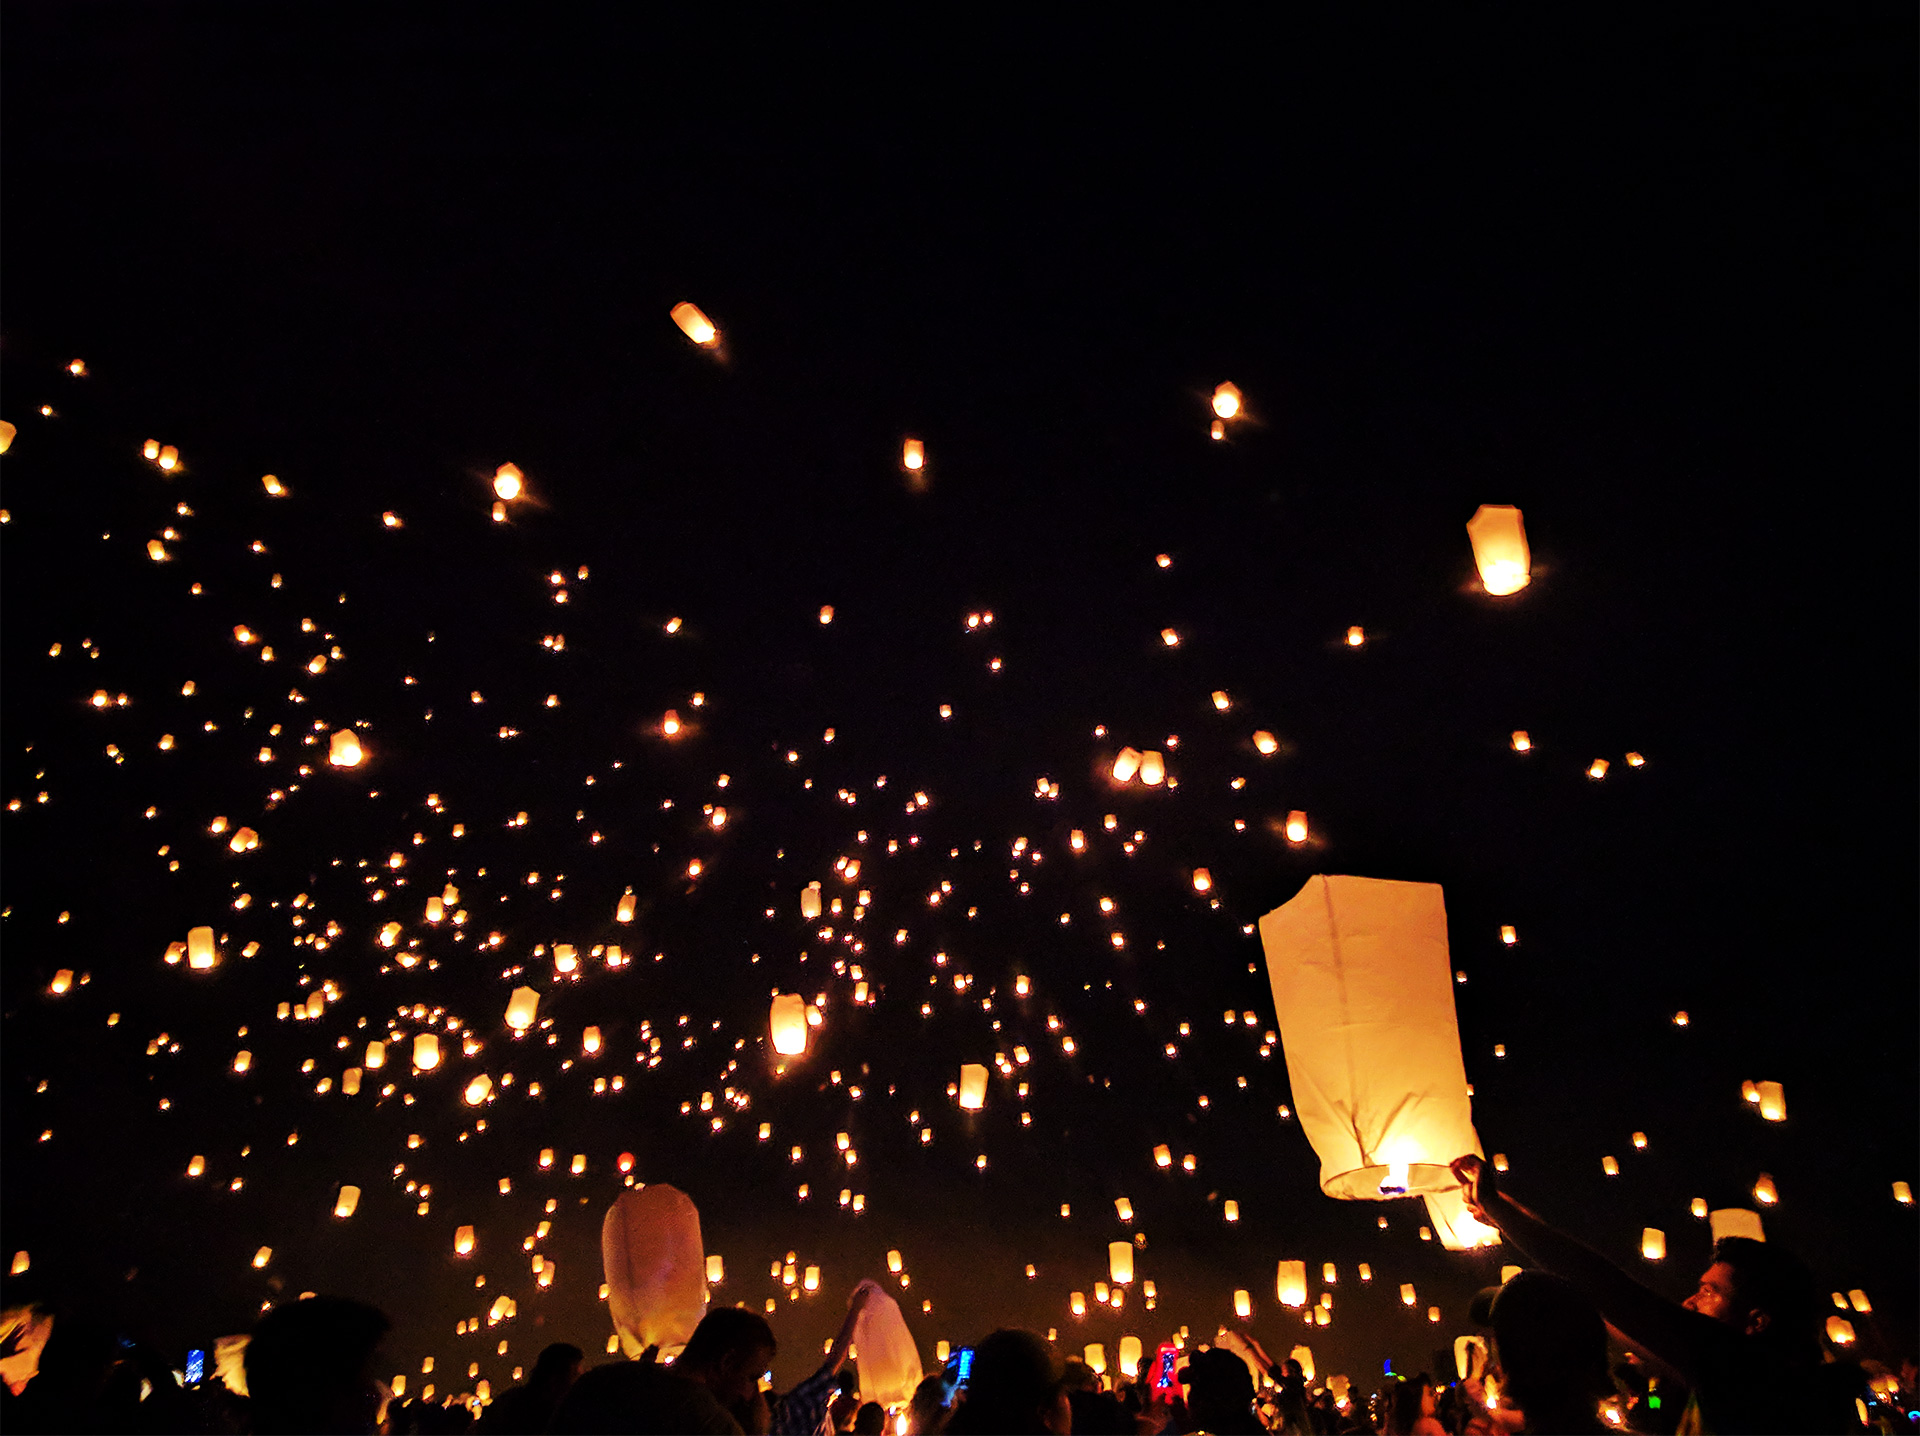 night lanterns launching into the sky